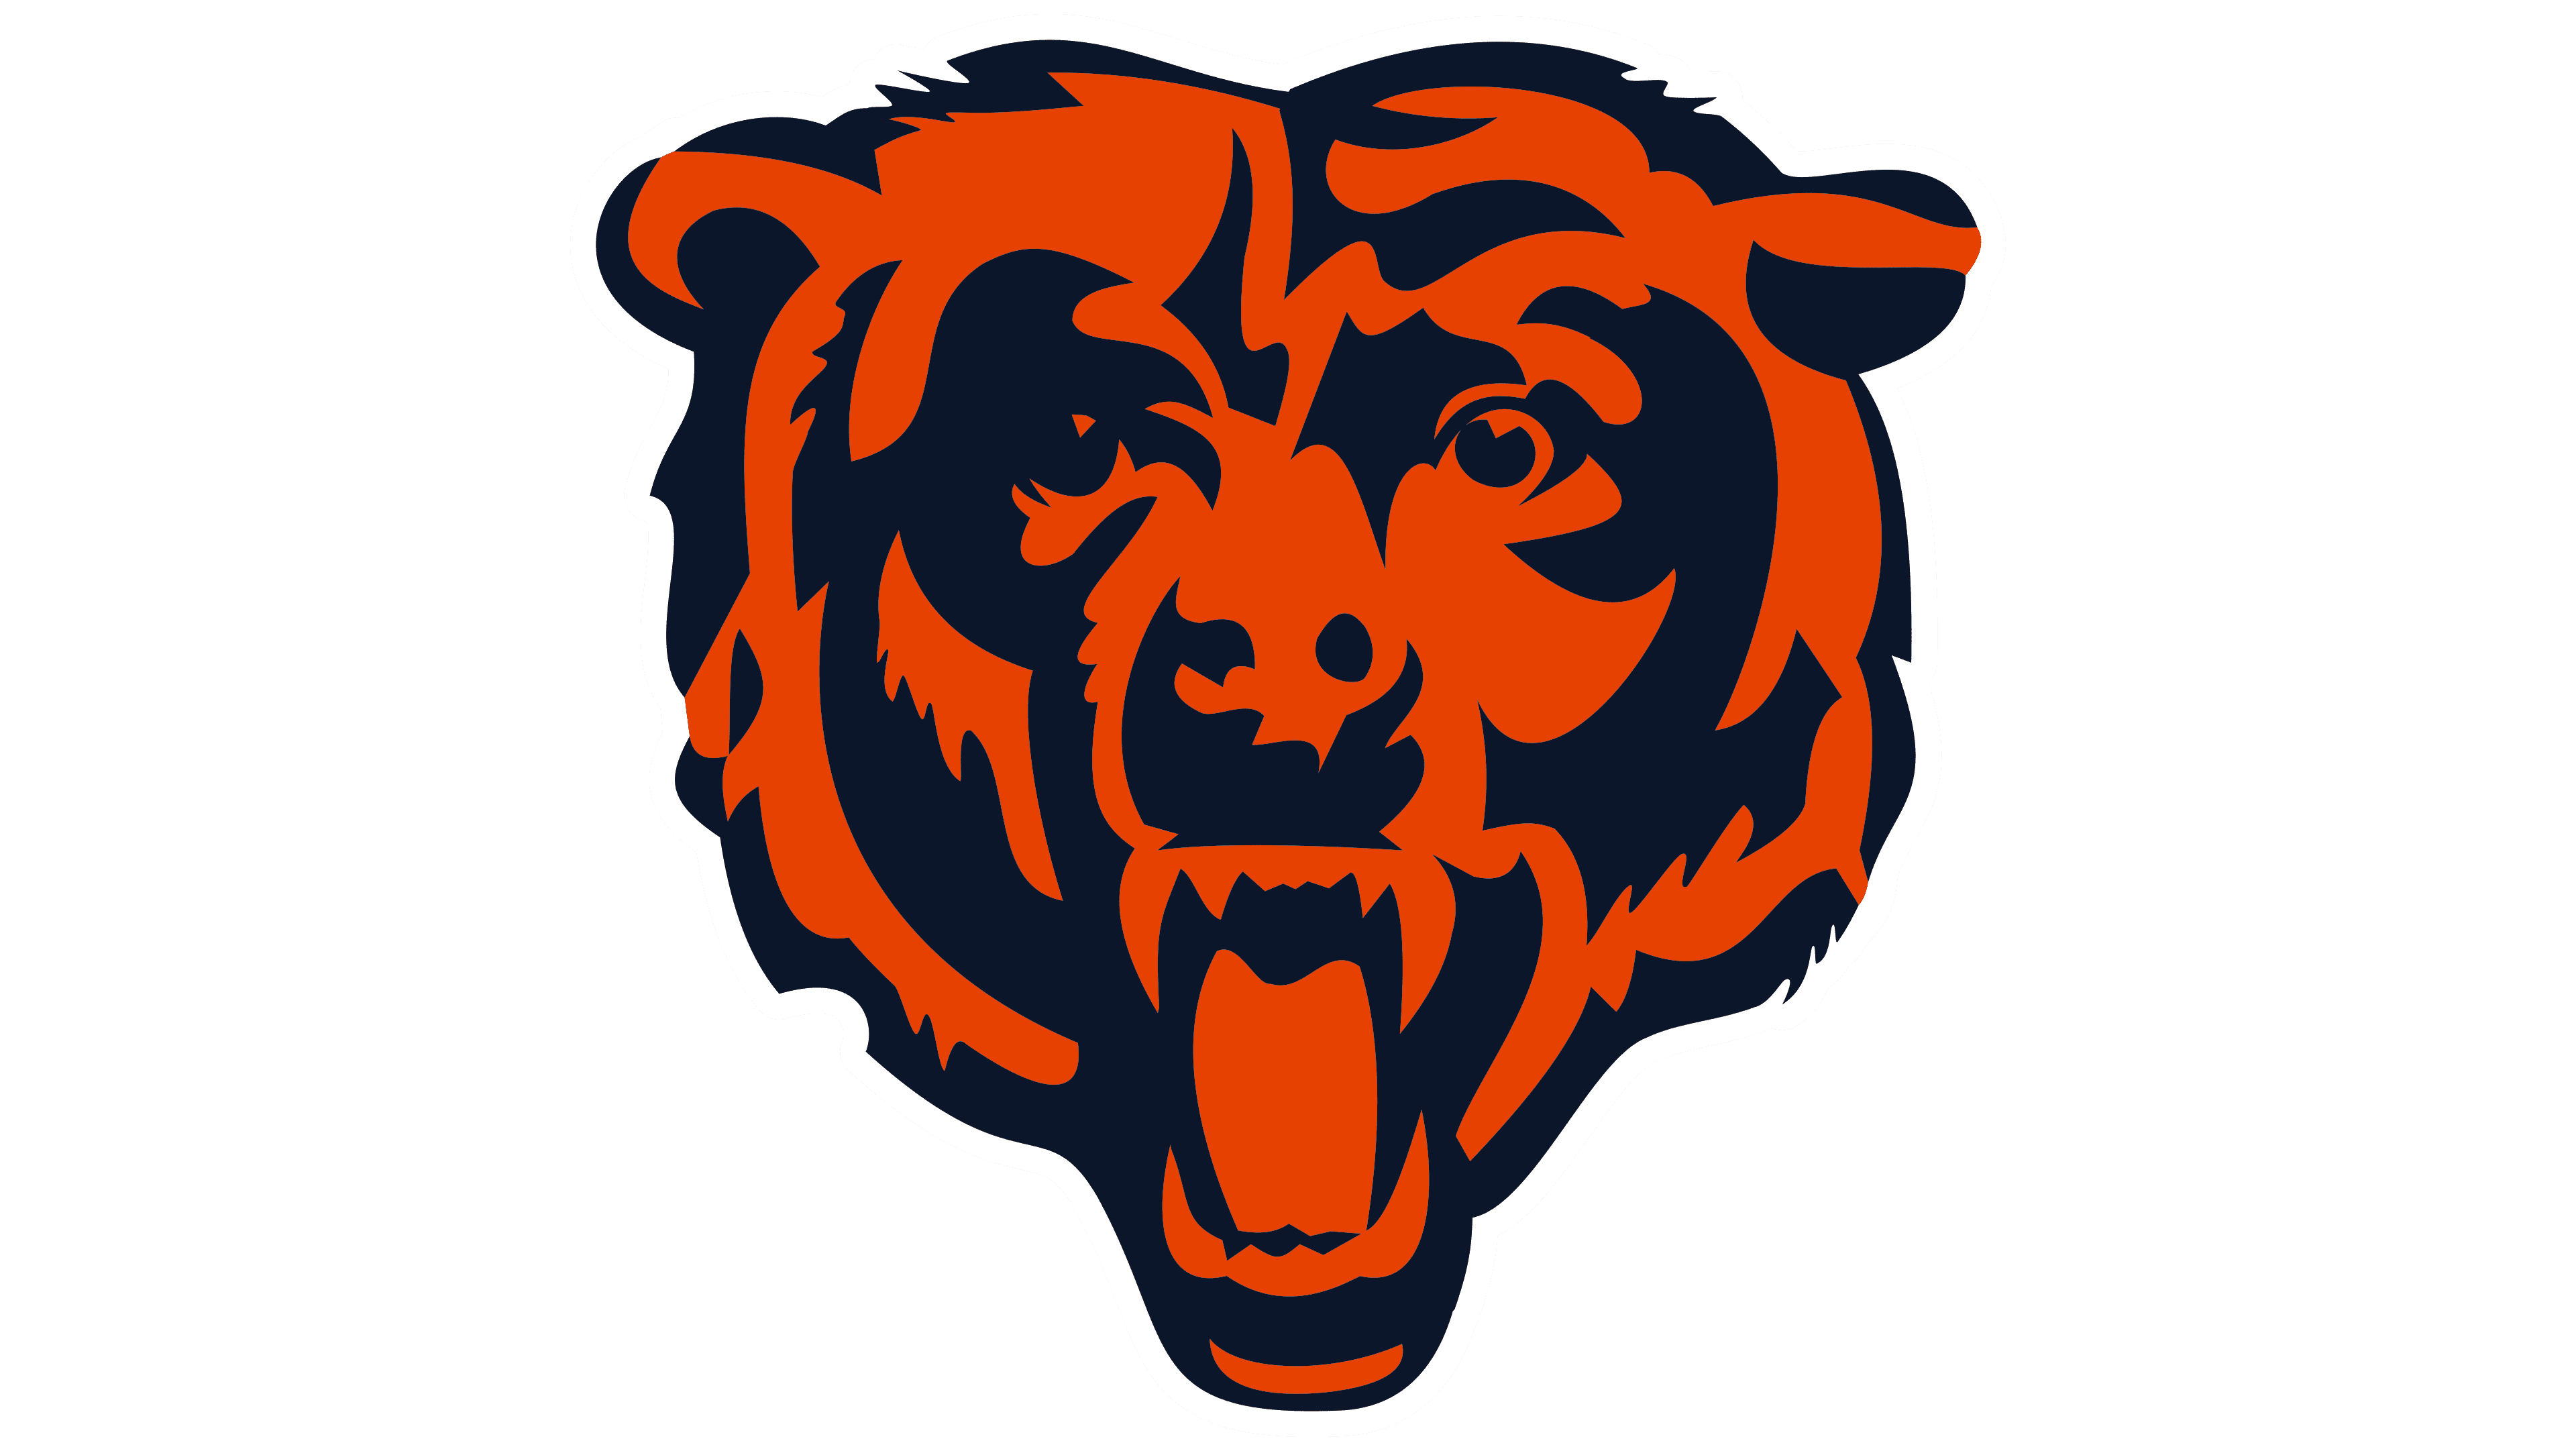 https://logos-world.net/wp-content/uploads/2020/06/Chicago-Bears-Logo.png